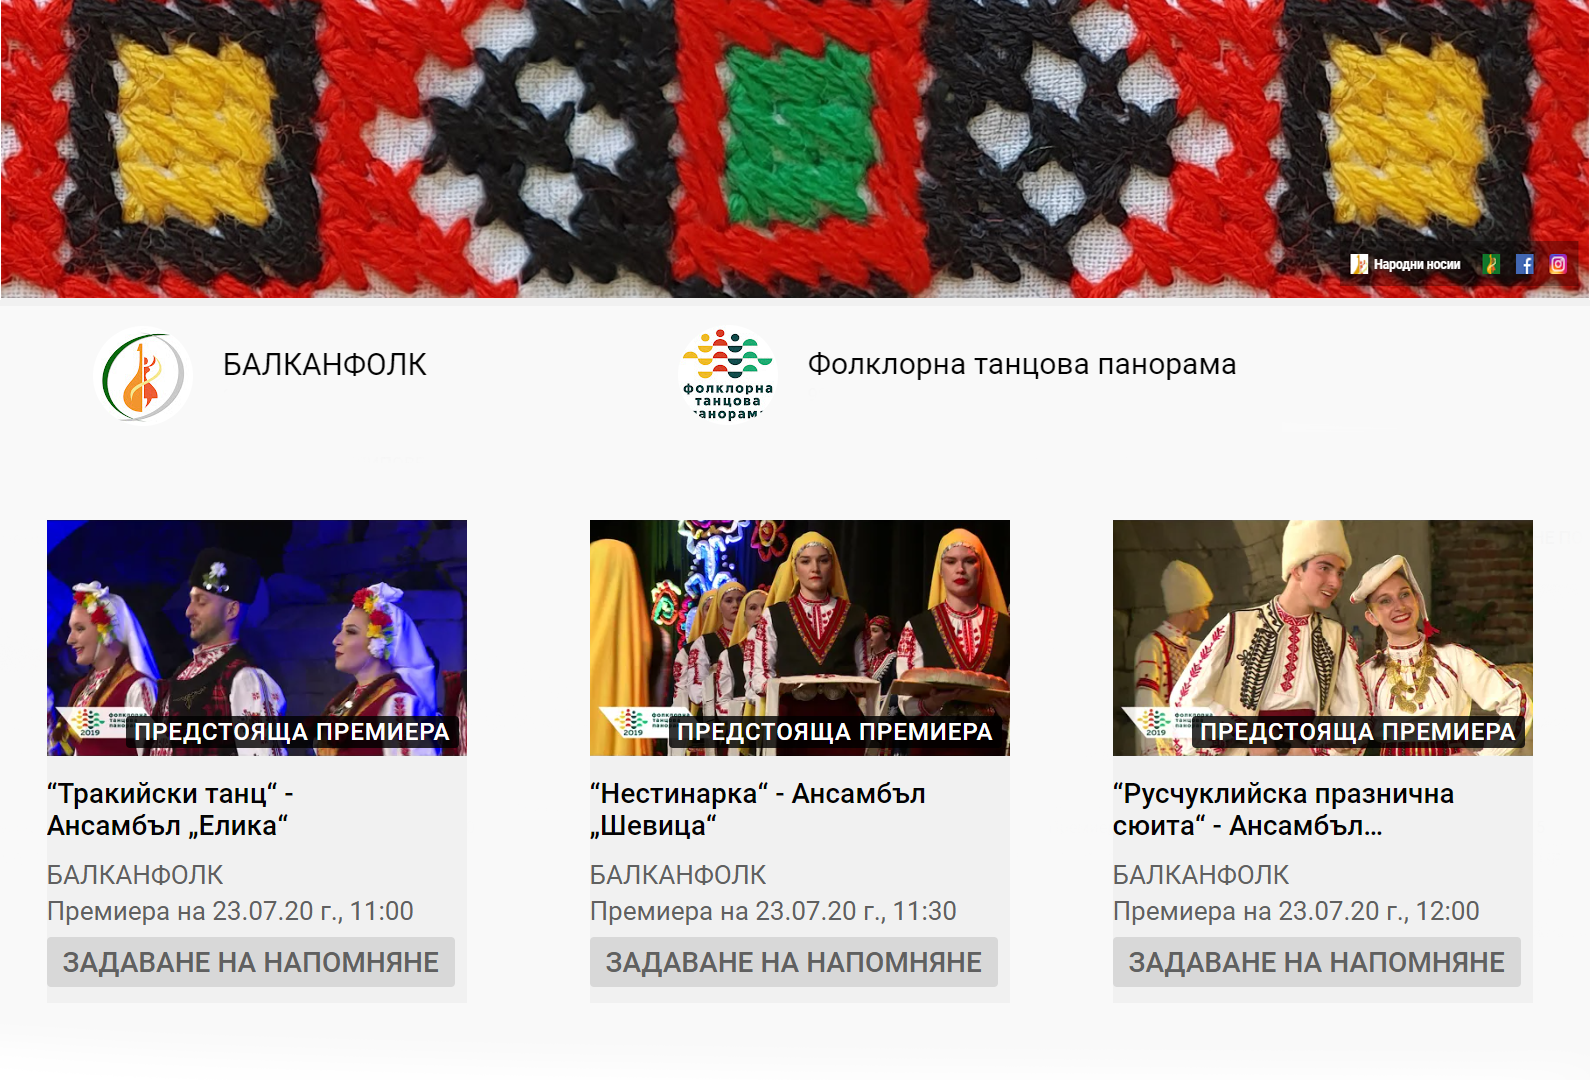 Bulgarian Folk Ensembles Elika, Shevitsa, Dilyanka